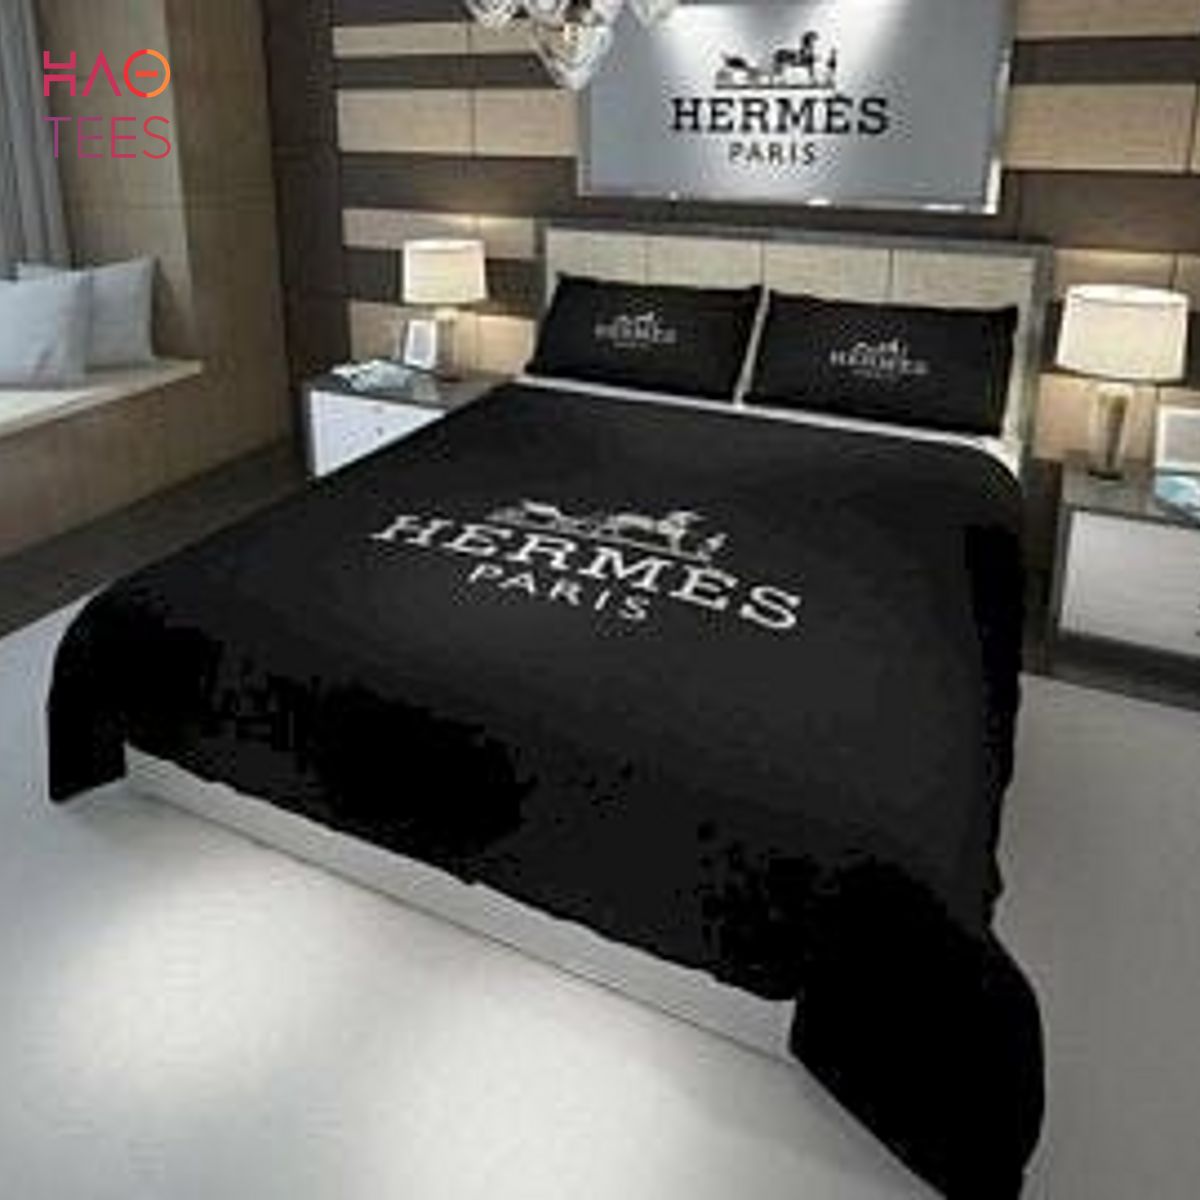 HOT Hermes Full Black Luxury Color Bedding Set Limited Editon